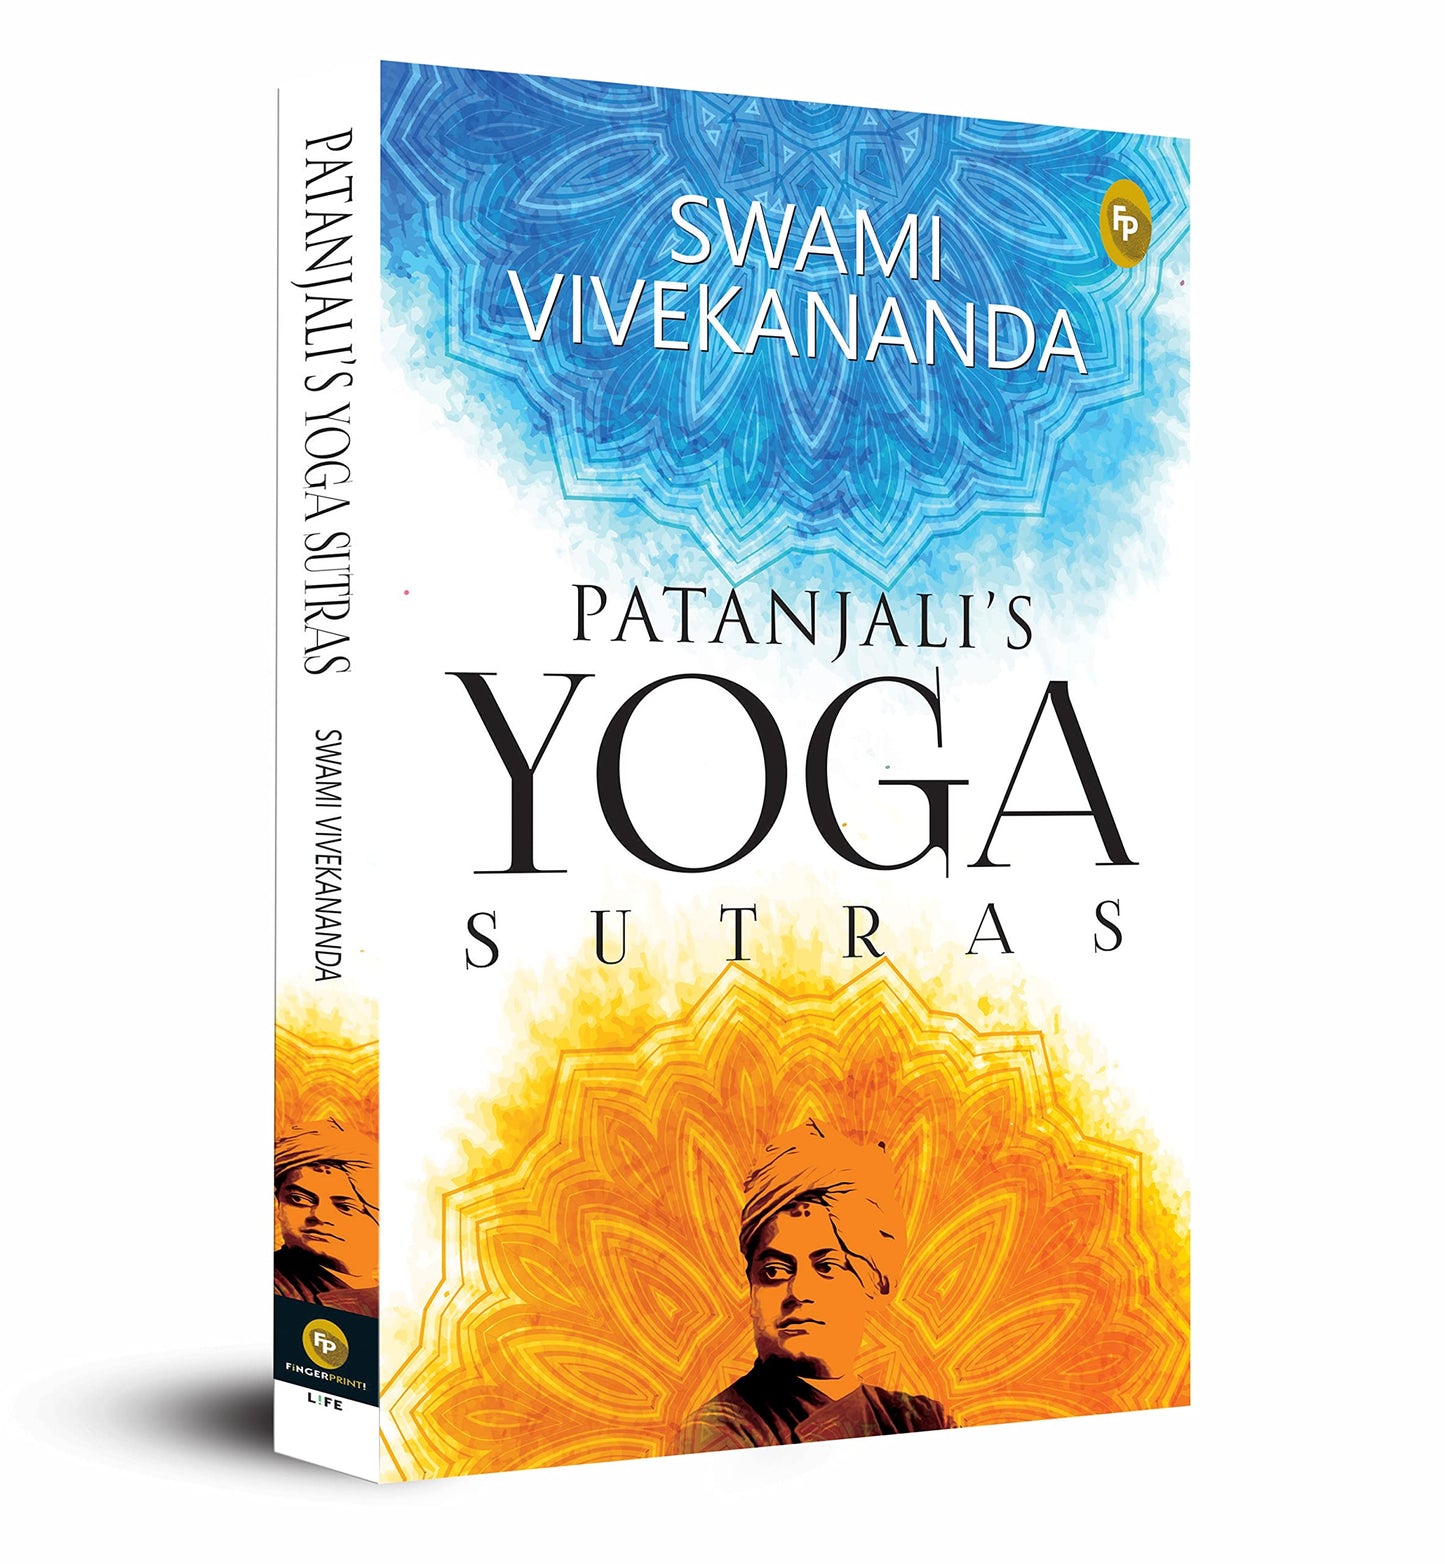 Patanjalis Yoga Sutras